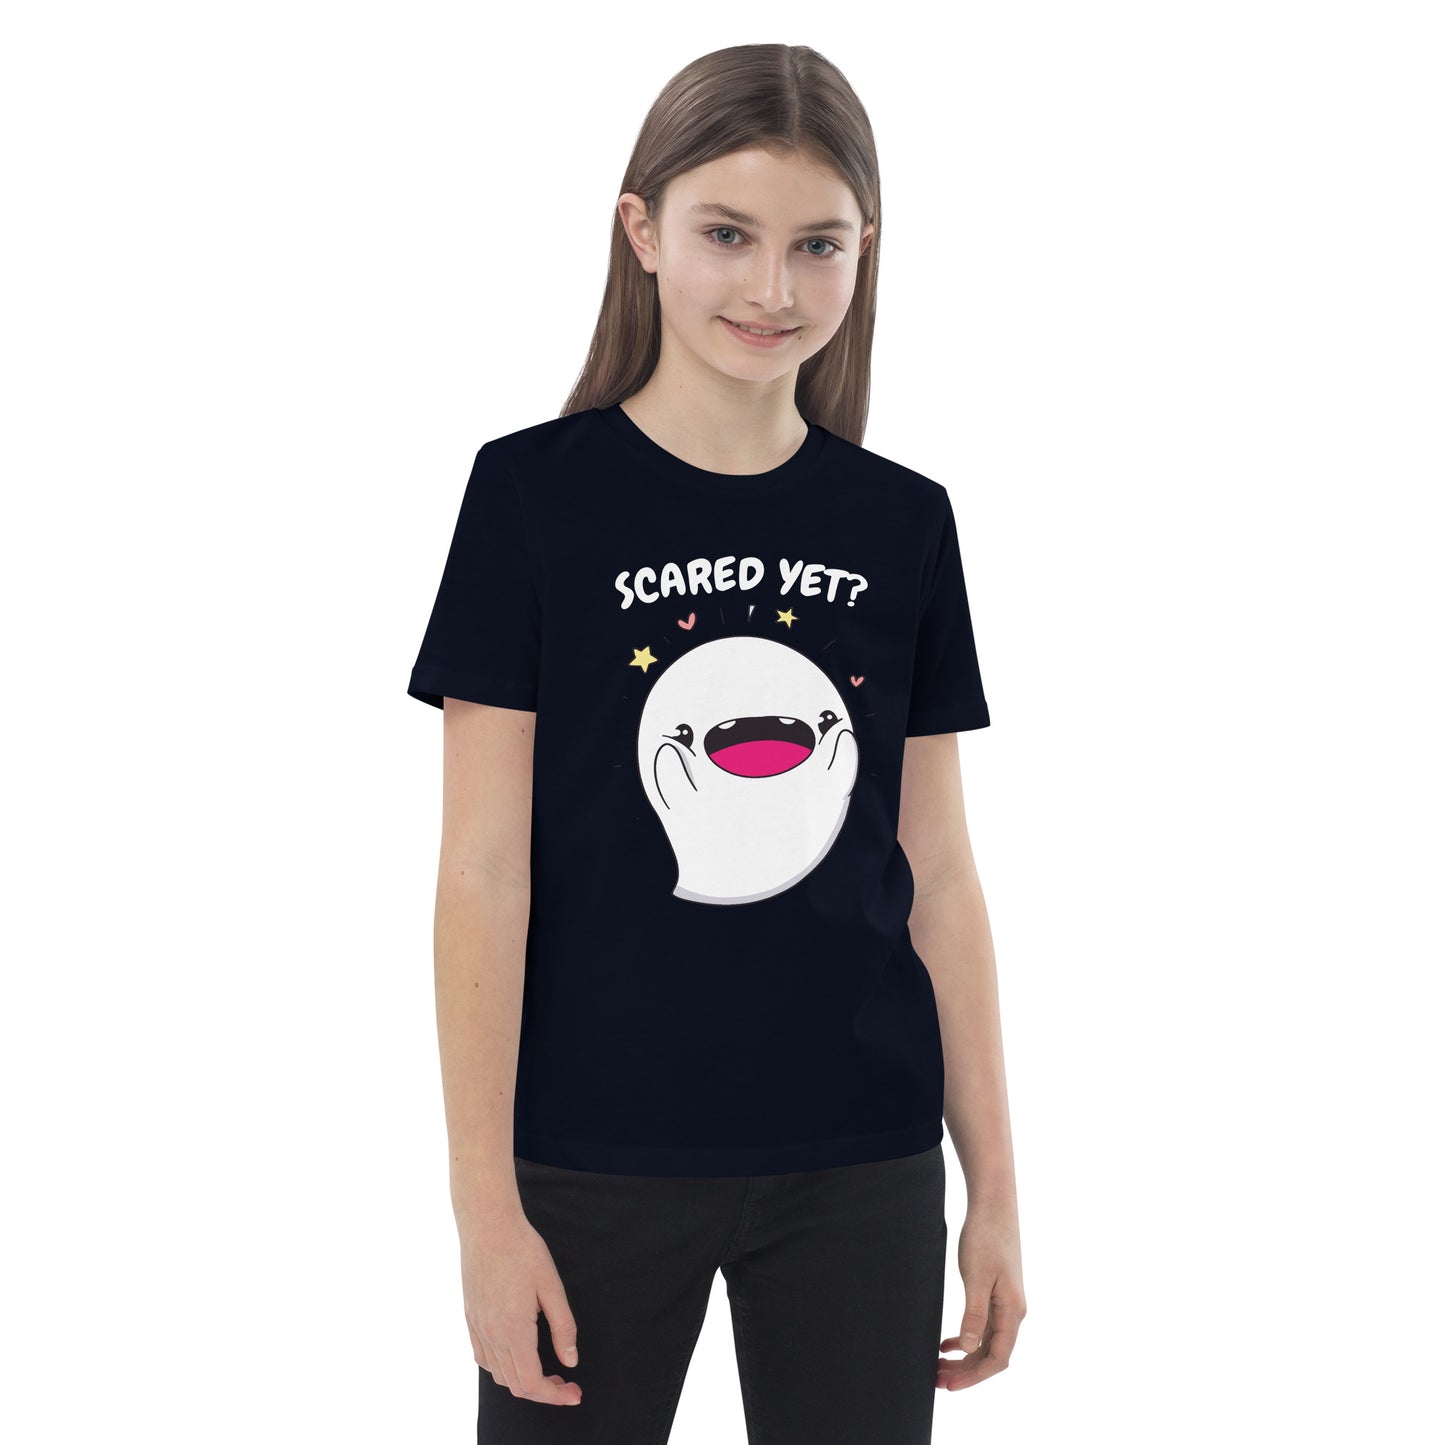 Scared yet - Organic cotton kids t-shirt